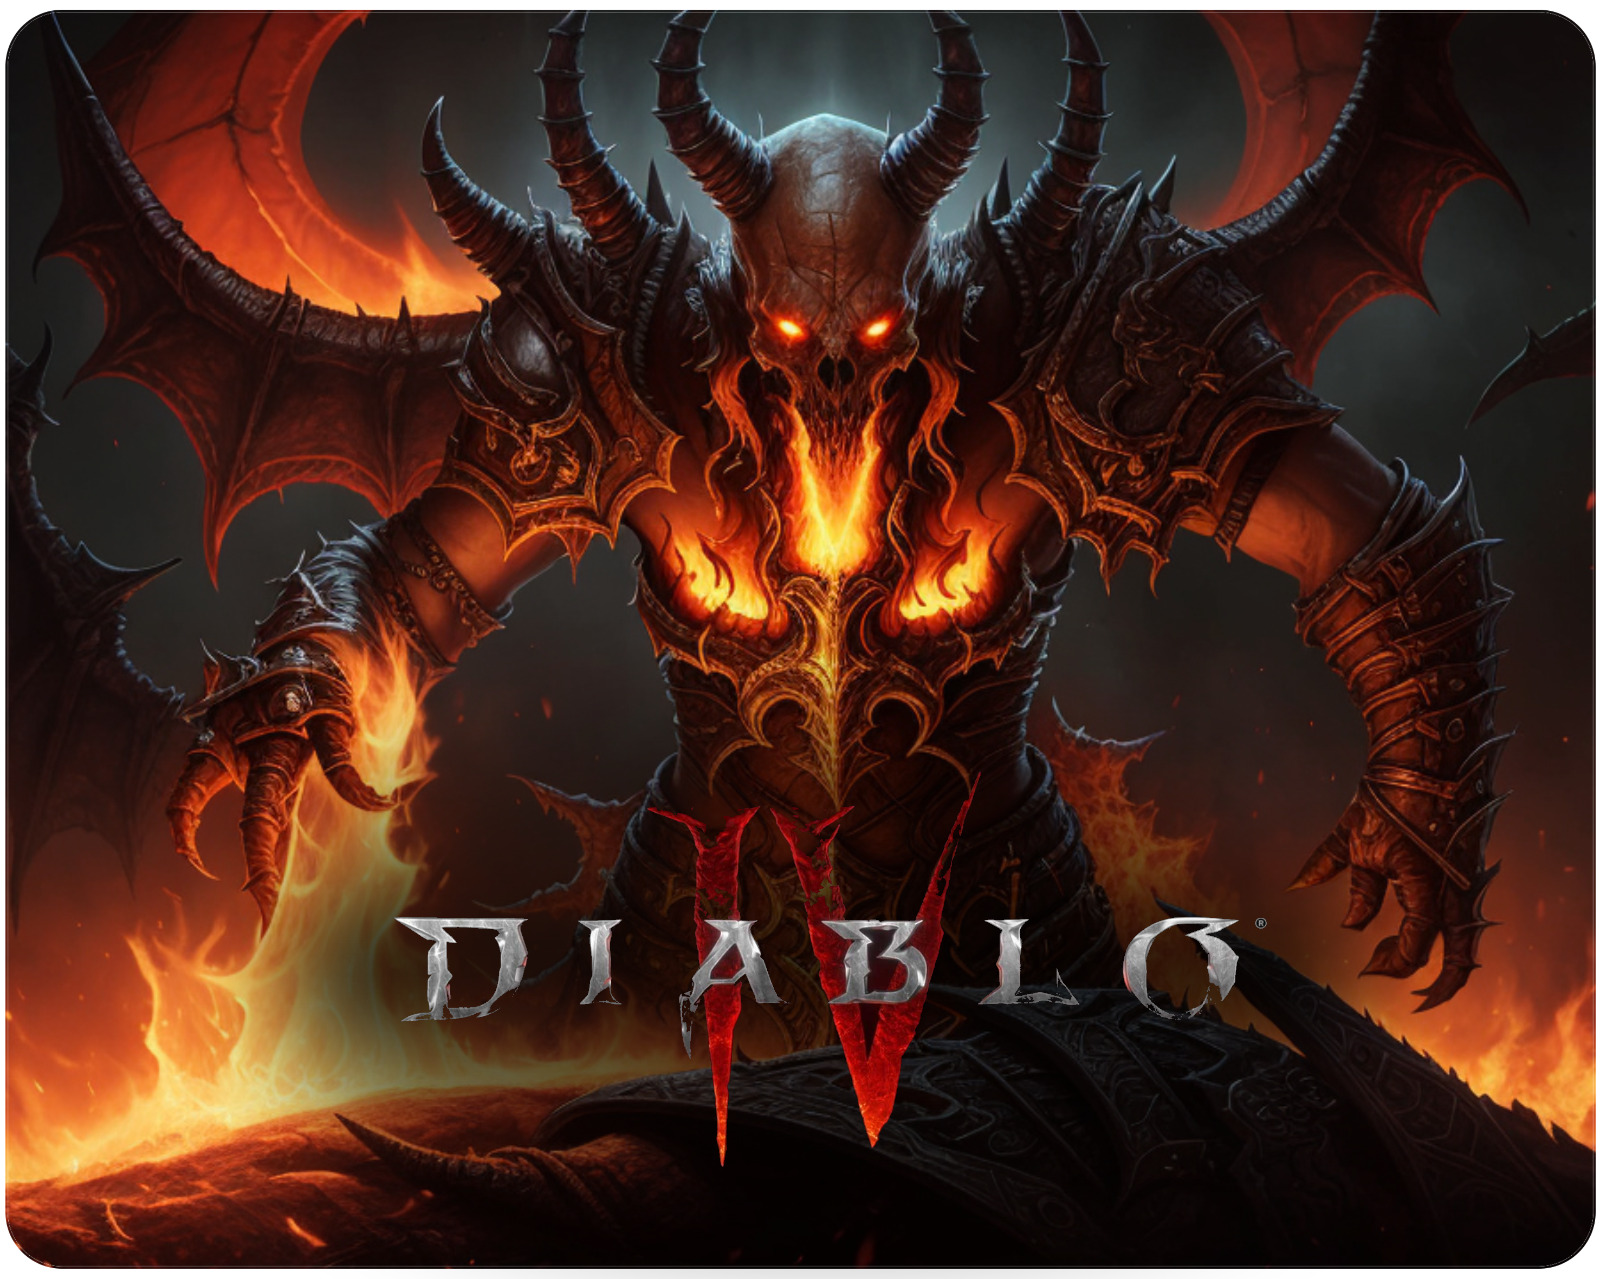 Mouse Pad - Diablo IV Diablo 4 Fantasy - Great Quality, Soft Feel